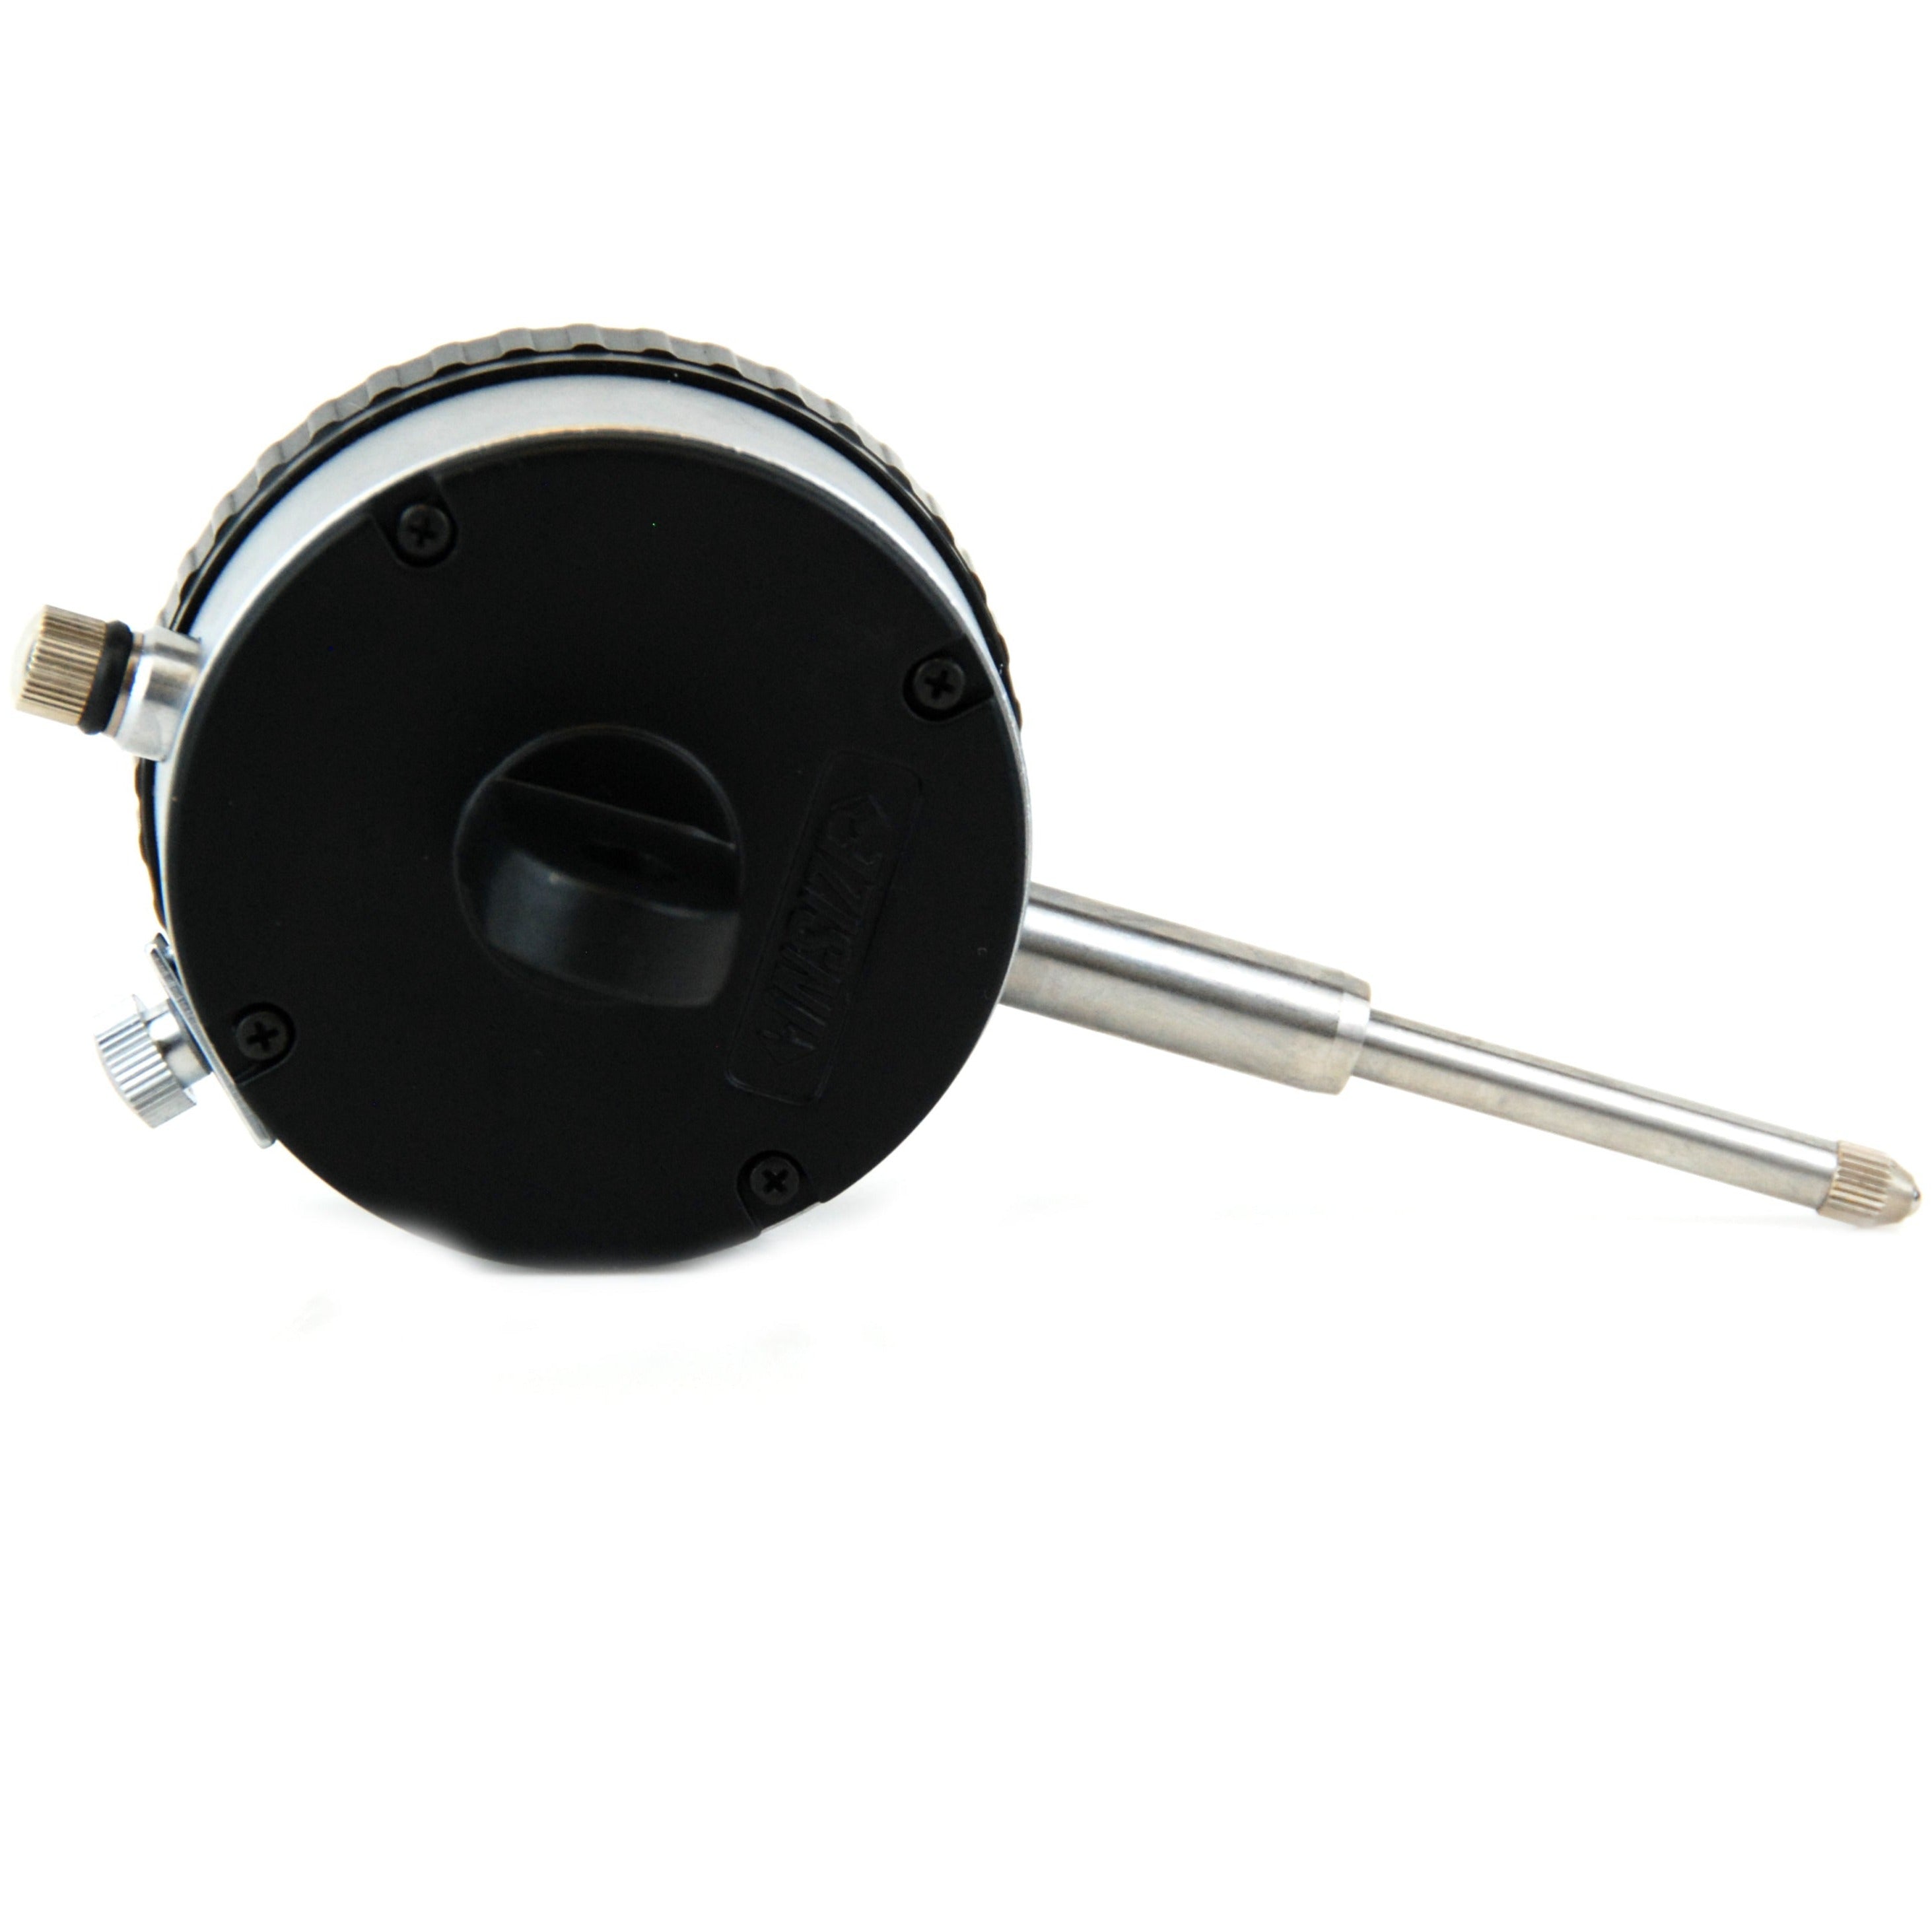 Insize Metric Dial Indicator 30mm Range Series 2310-30A